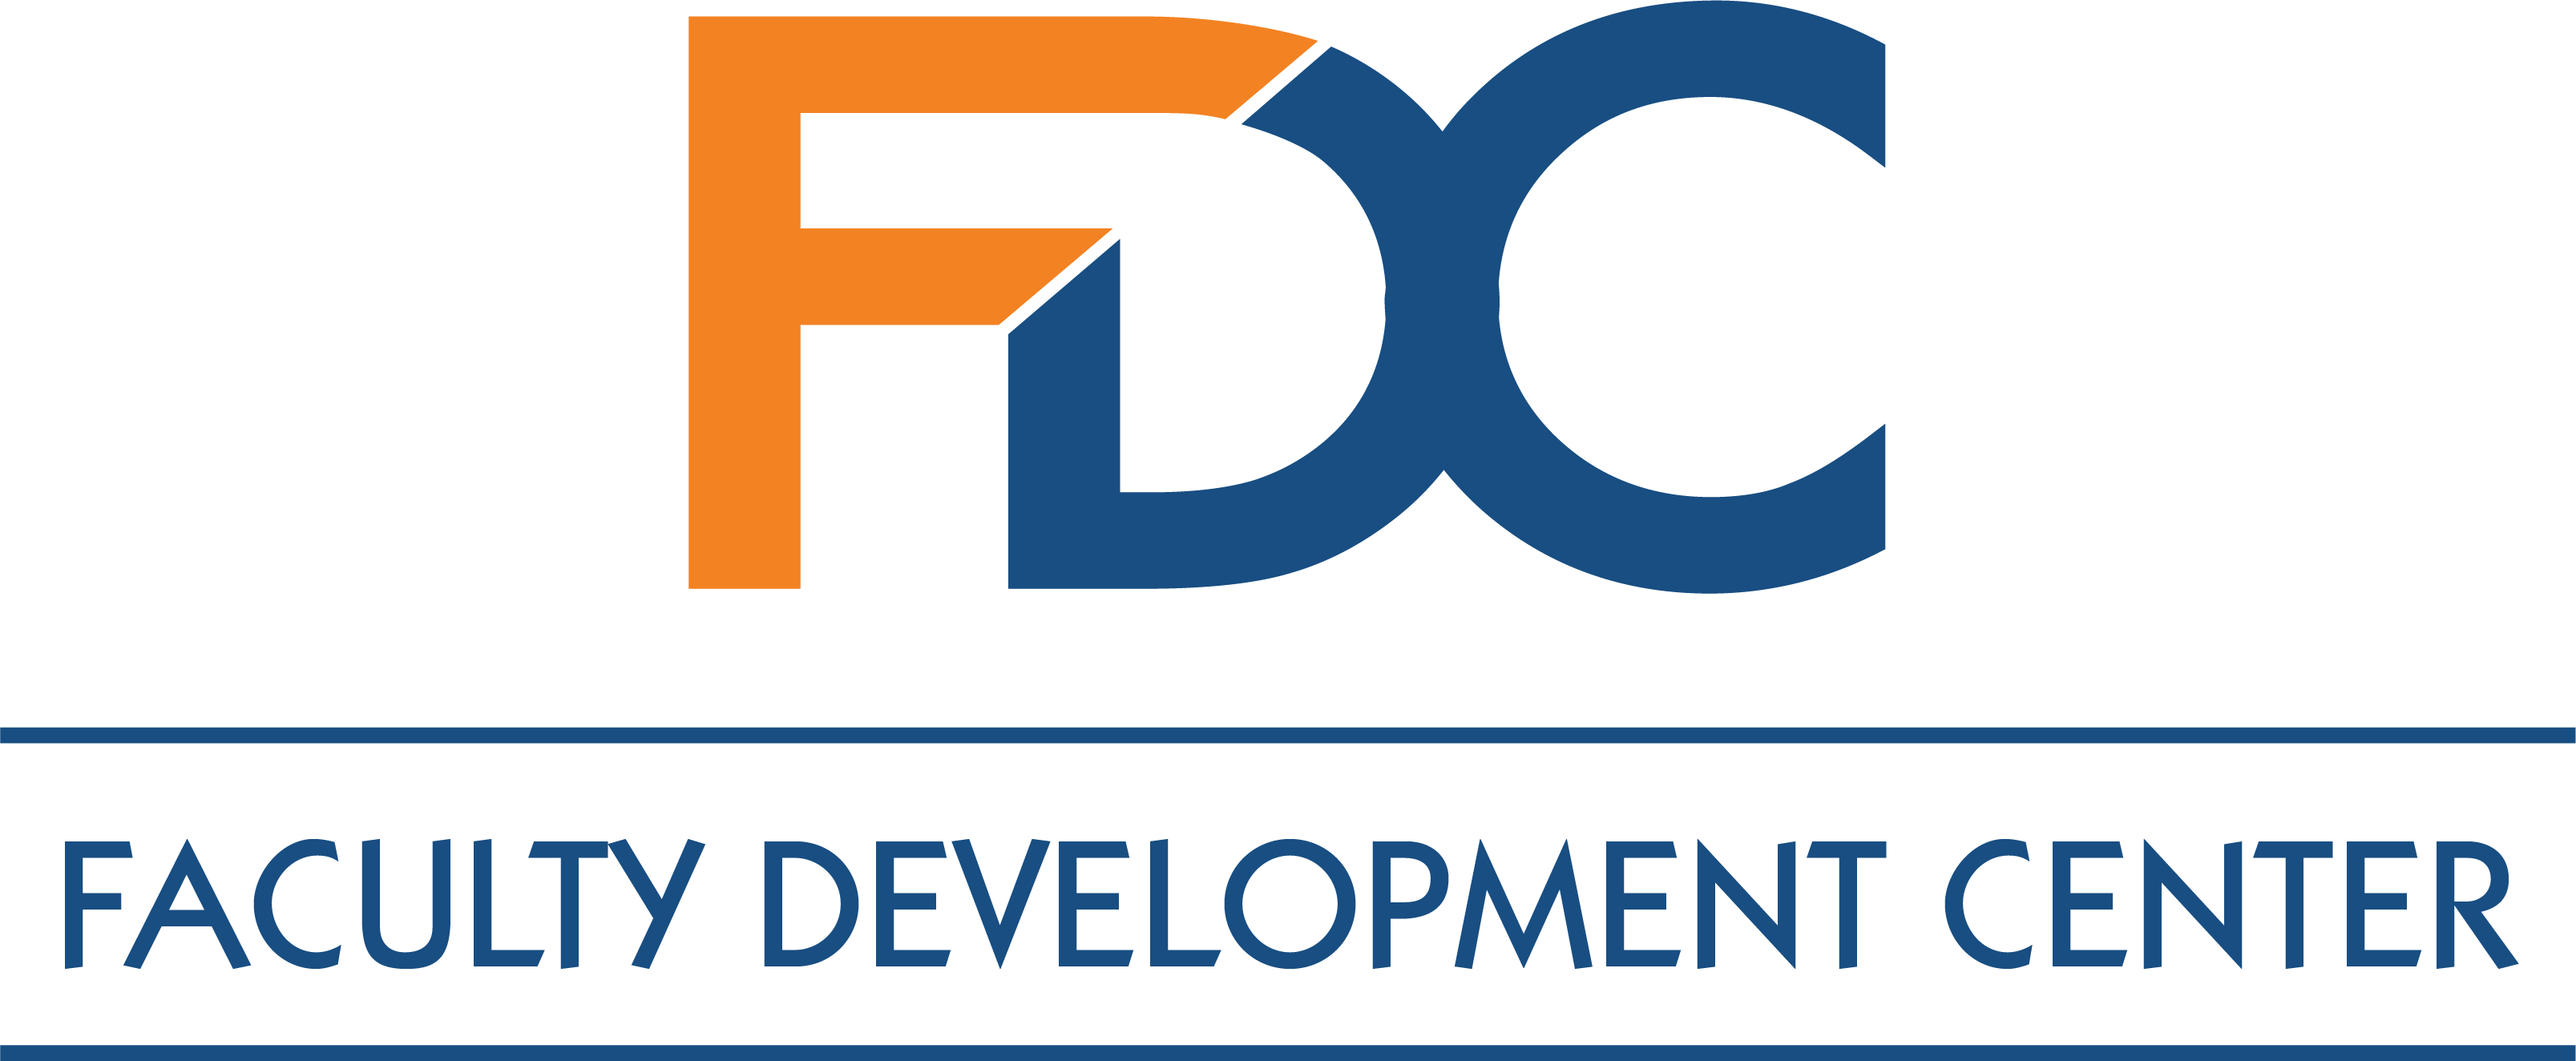 FDC Logo - Faculty Development Center - Faculty Development Center | CSUF